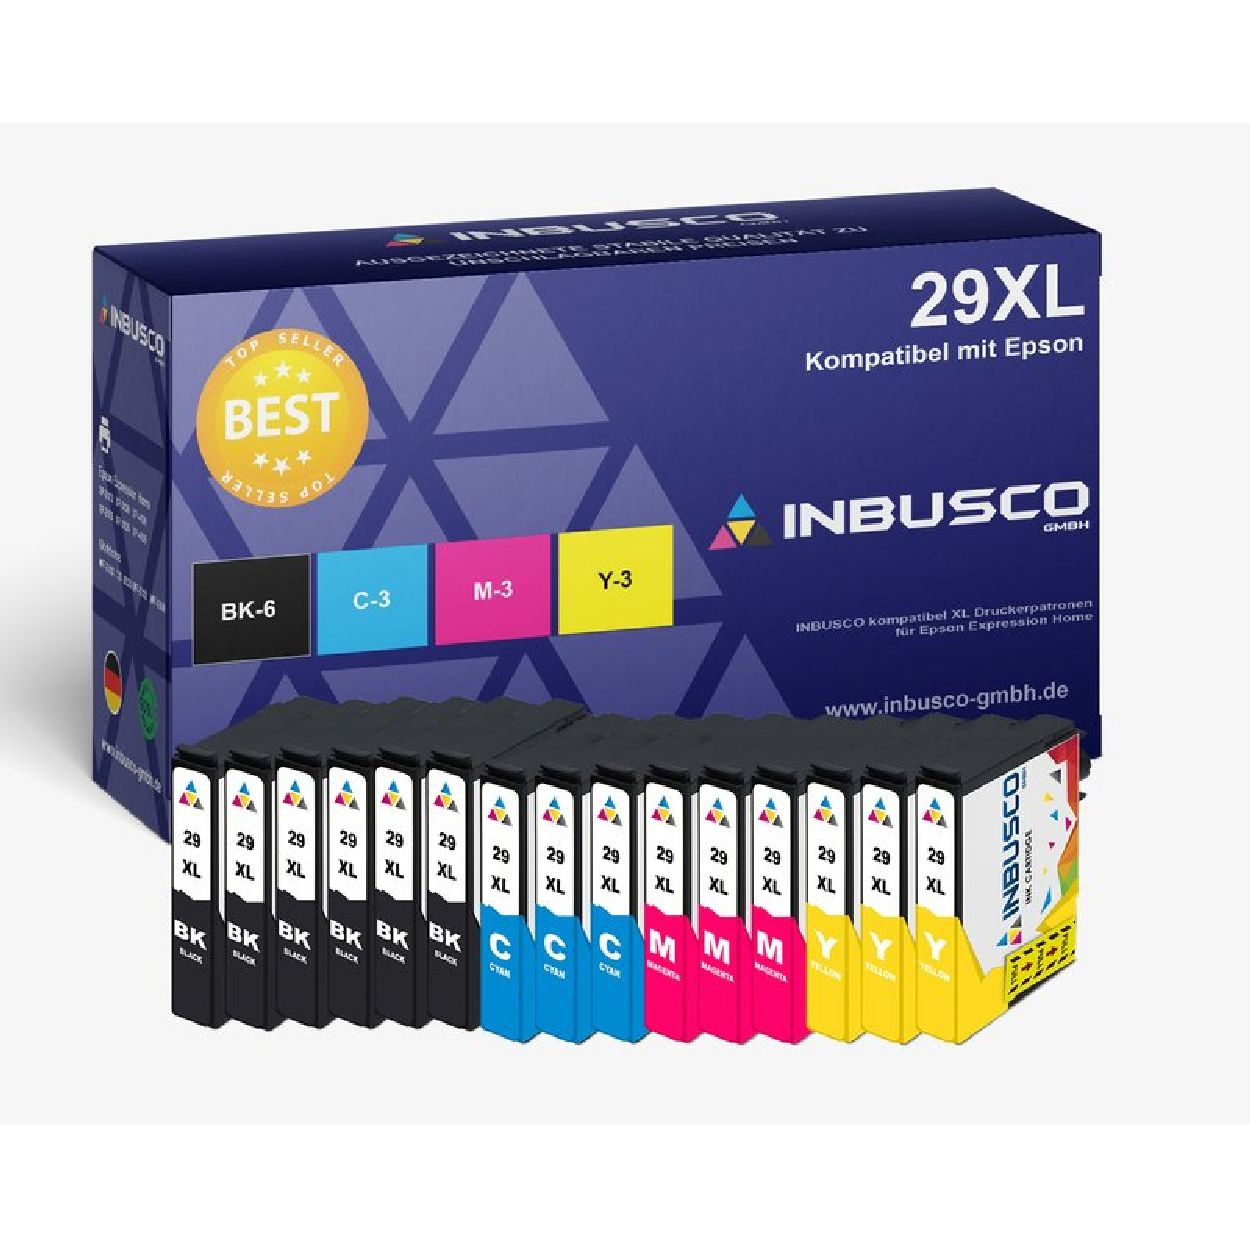 INBUSCO / KUBIS Tintenpatrone Mehrfarbig SET29XL (15x29XL)